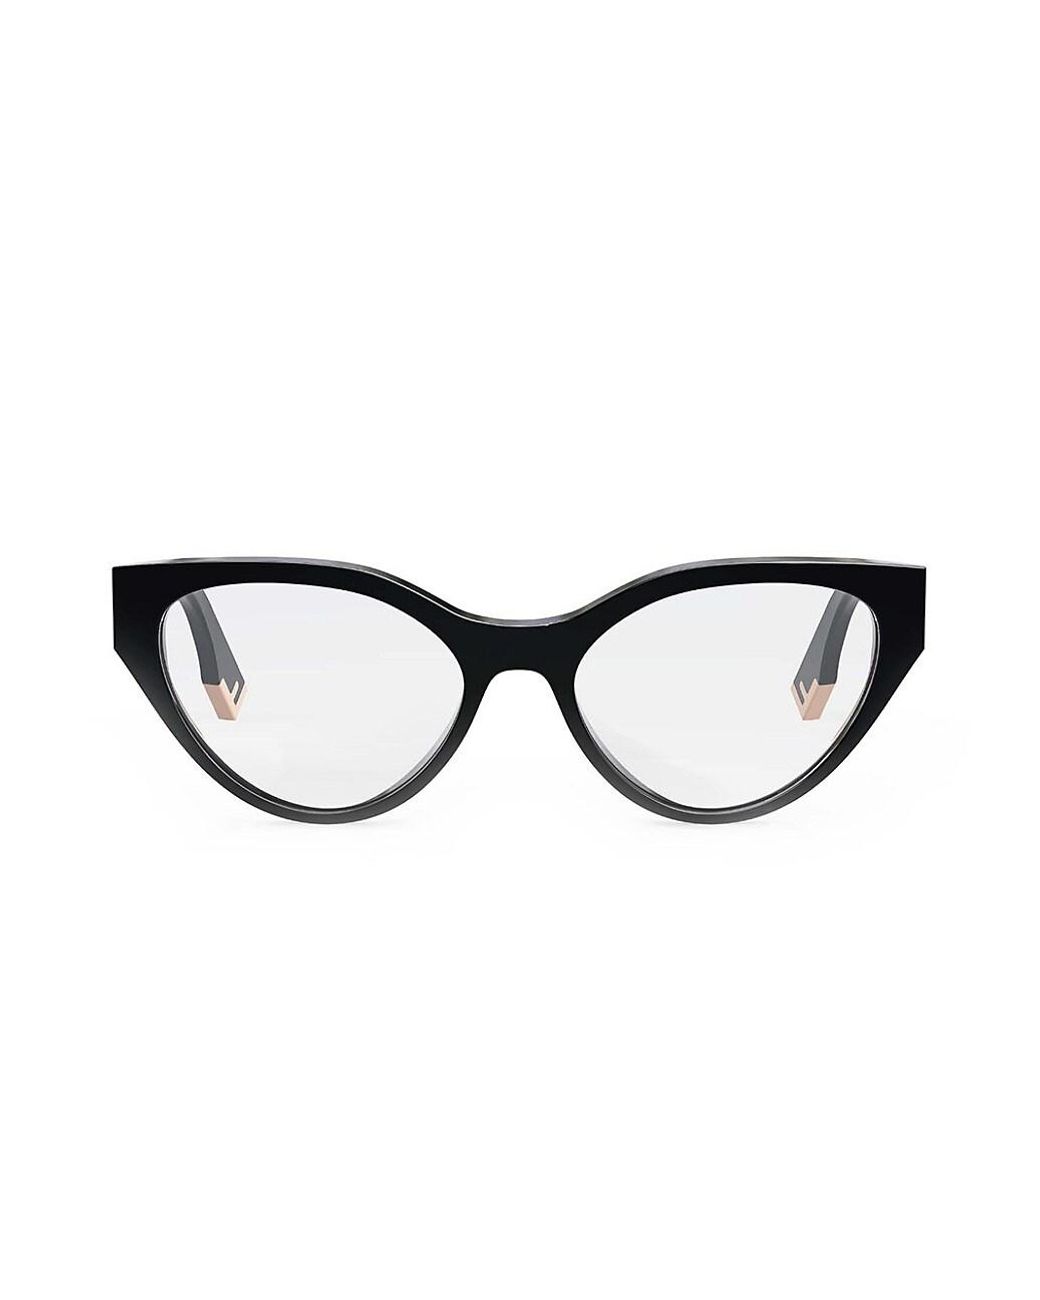 Fendi Way 53mm Cat Eye Optical Glasses in Black | Lyst